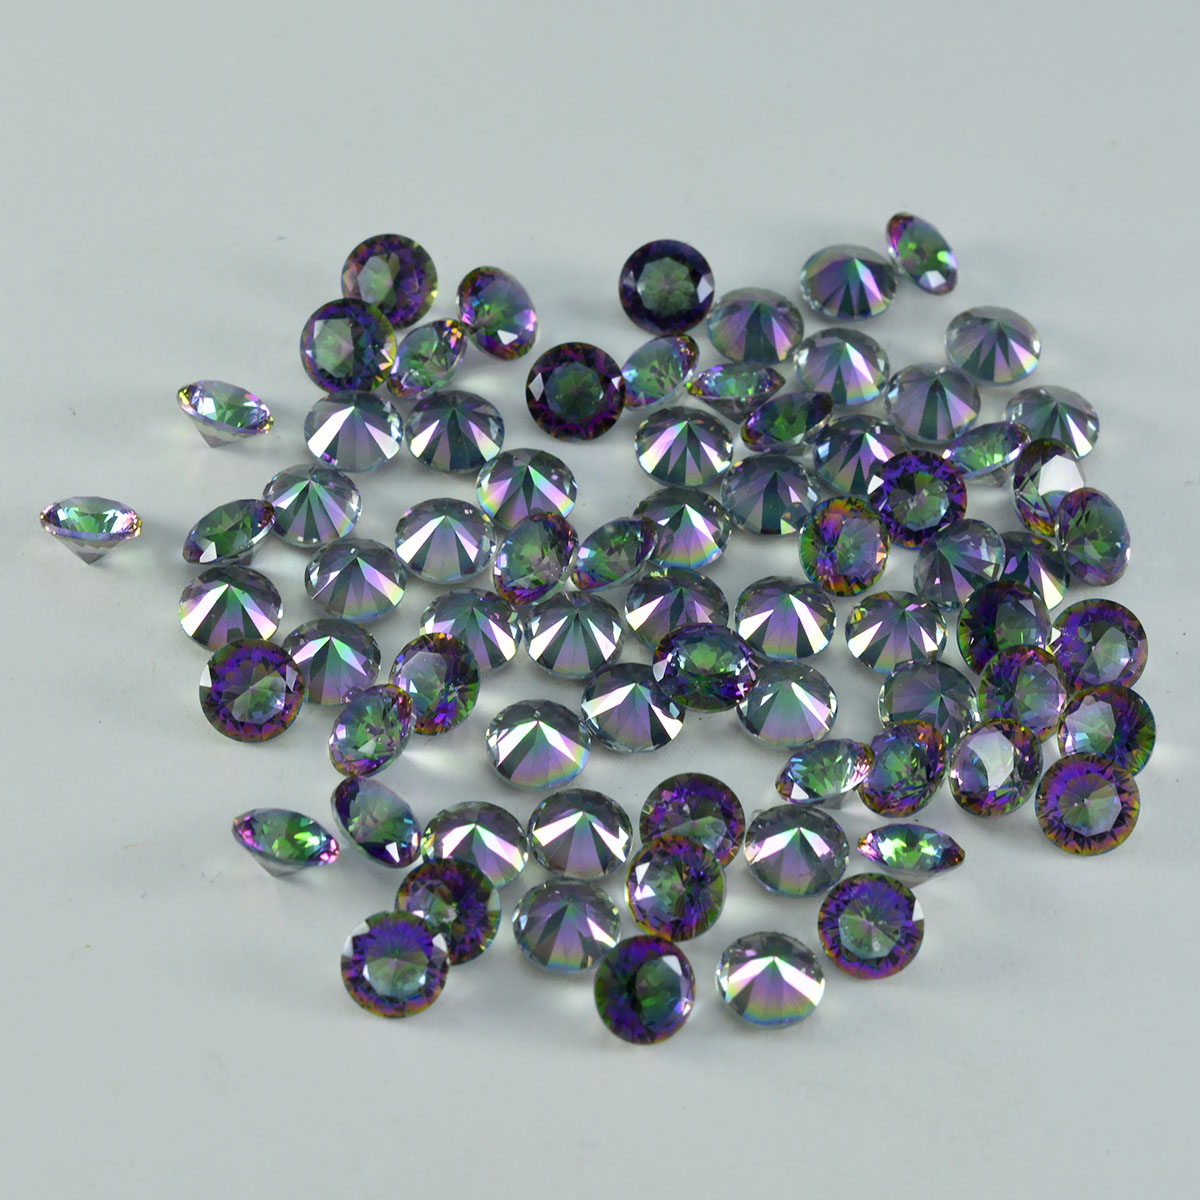 Riyogems 1PC Multi Color Mystic Quartz Faceted 4x4 mm Round Shape sweet Quality Loose Gemstone